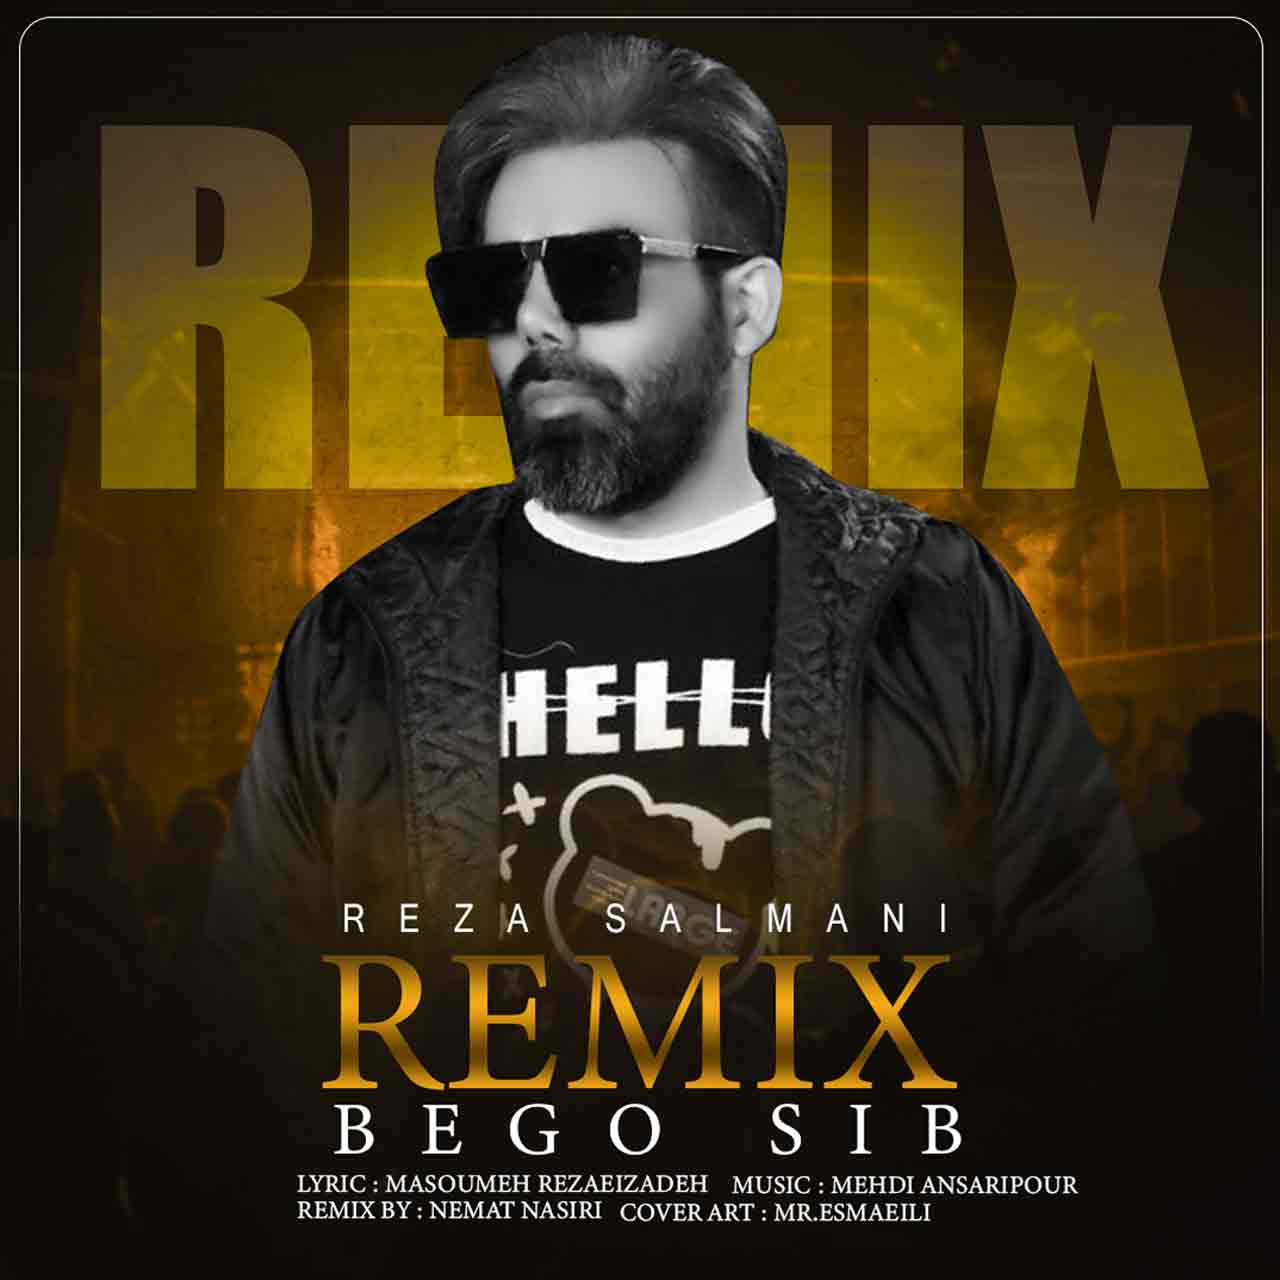 Reza Salmani – Bego Sib (Remix)